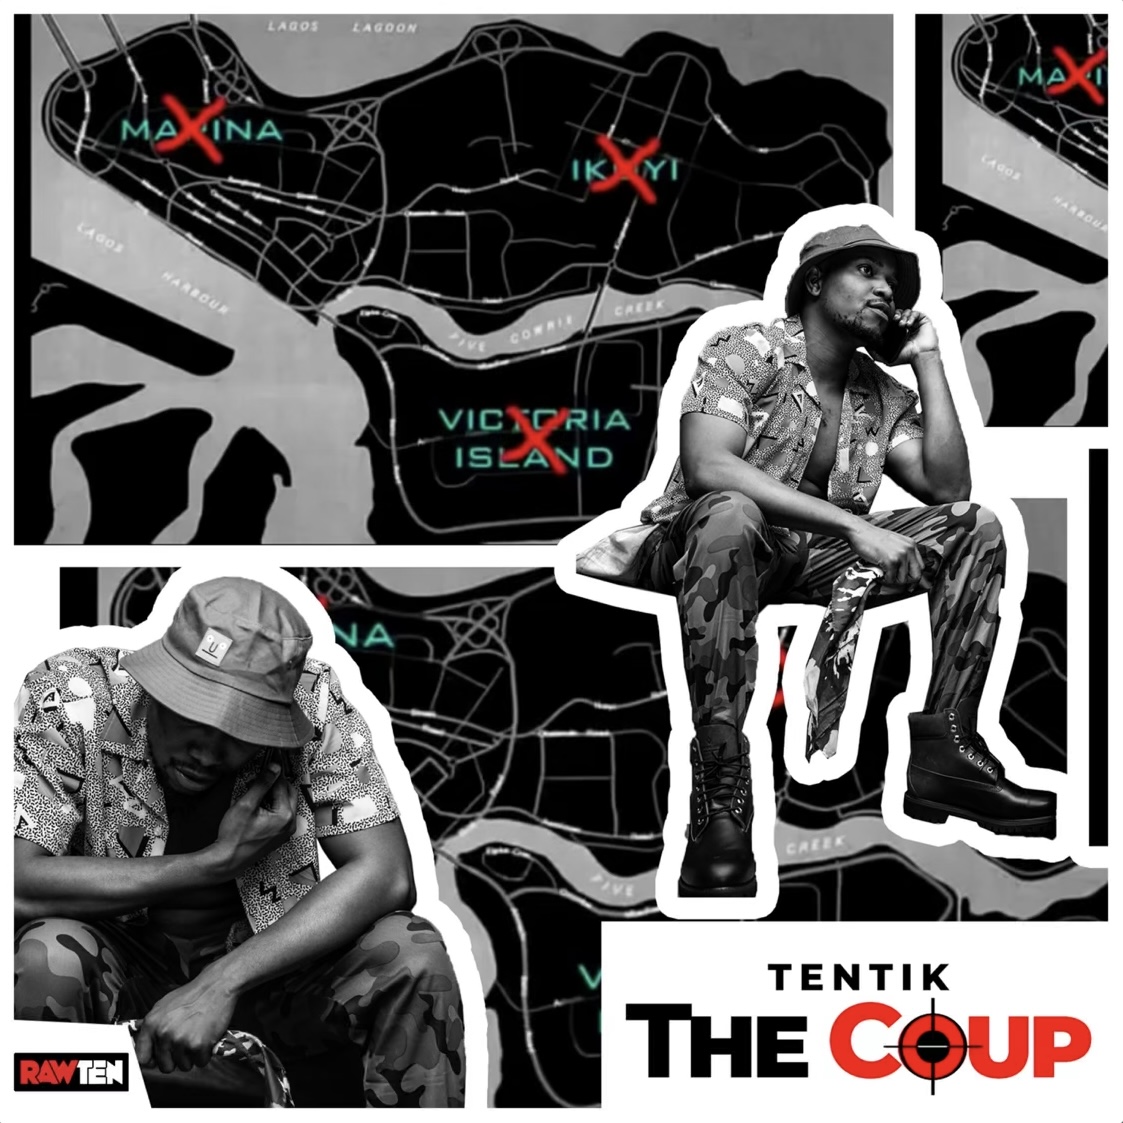 the coup single artwork